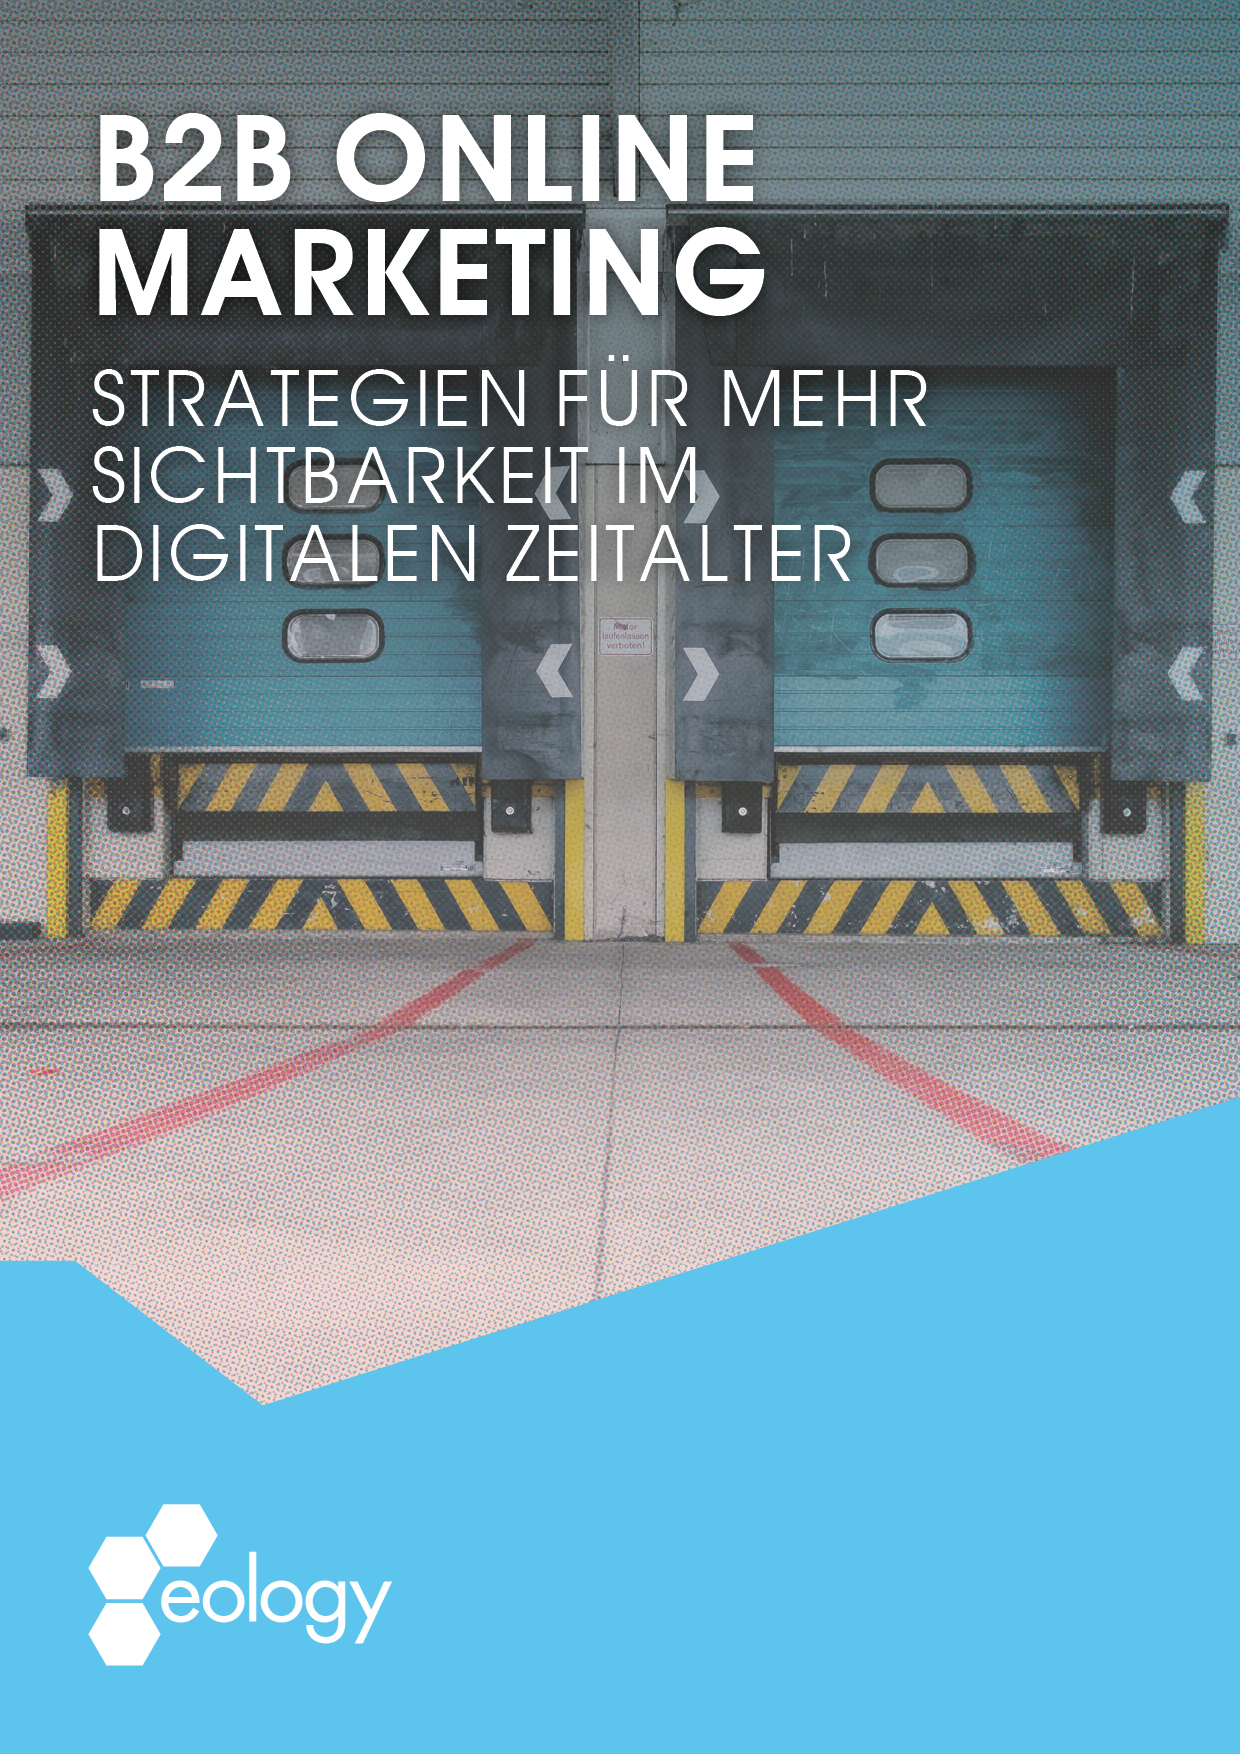 Whitepaper Titelblatt "B2B Online Marketing" von eology GmbH.